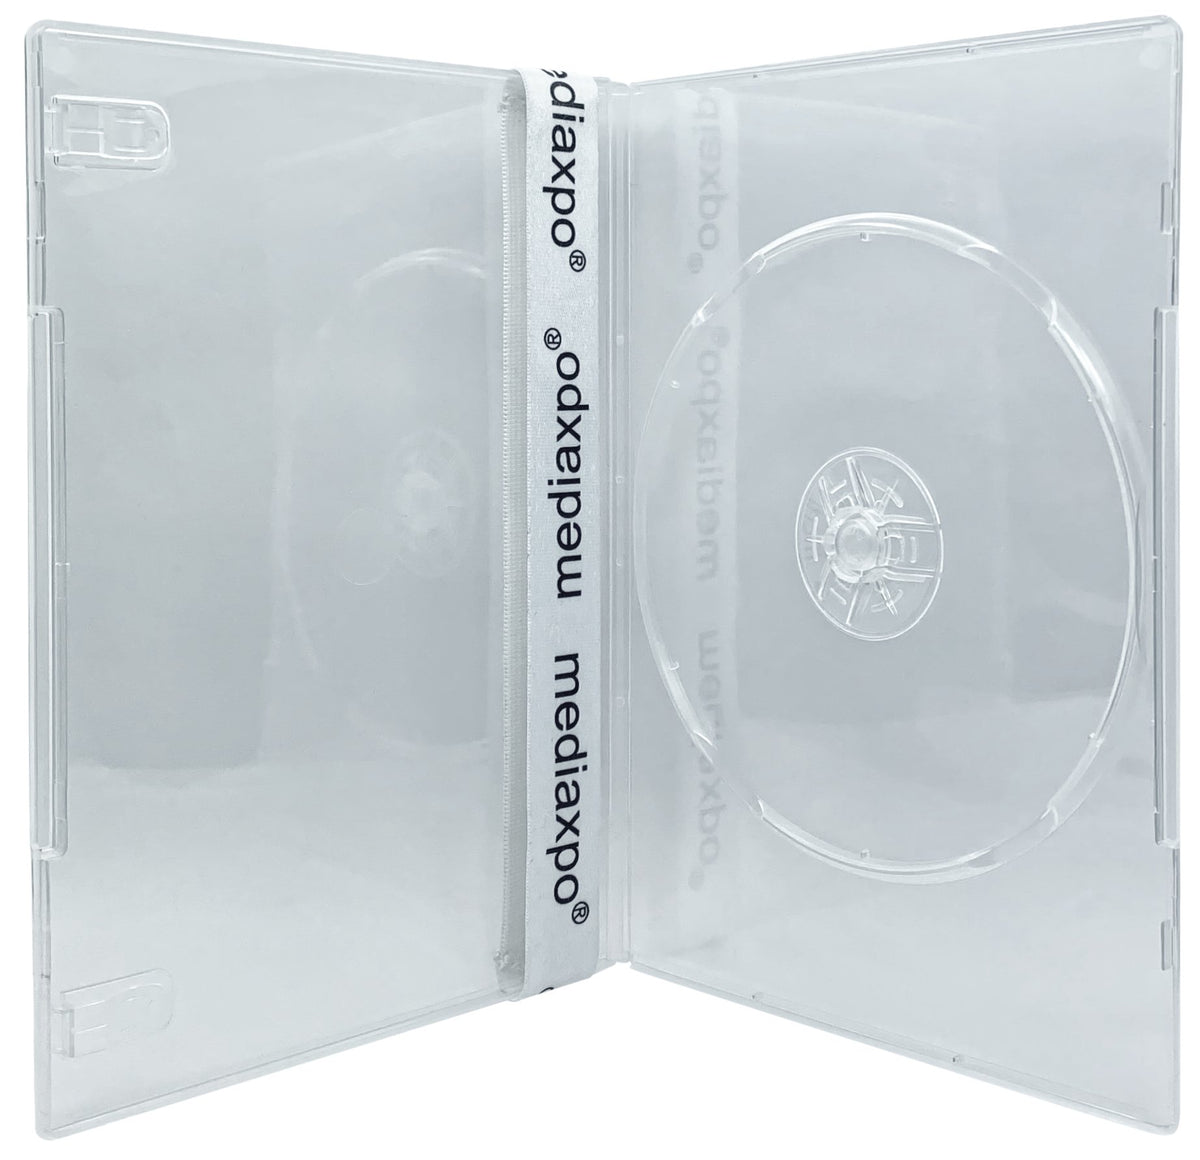  CheckOutStore (100) Premium Standard Single 1-Disc DVD